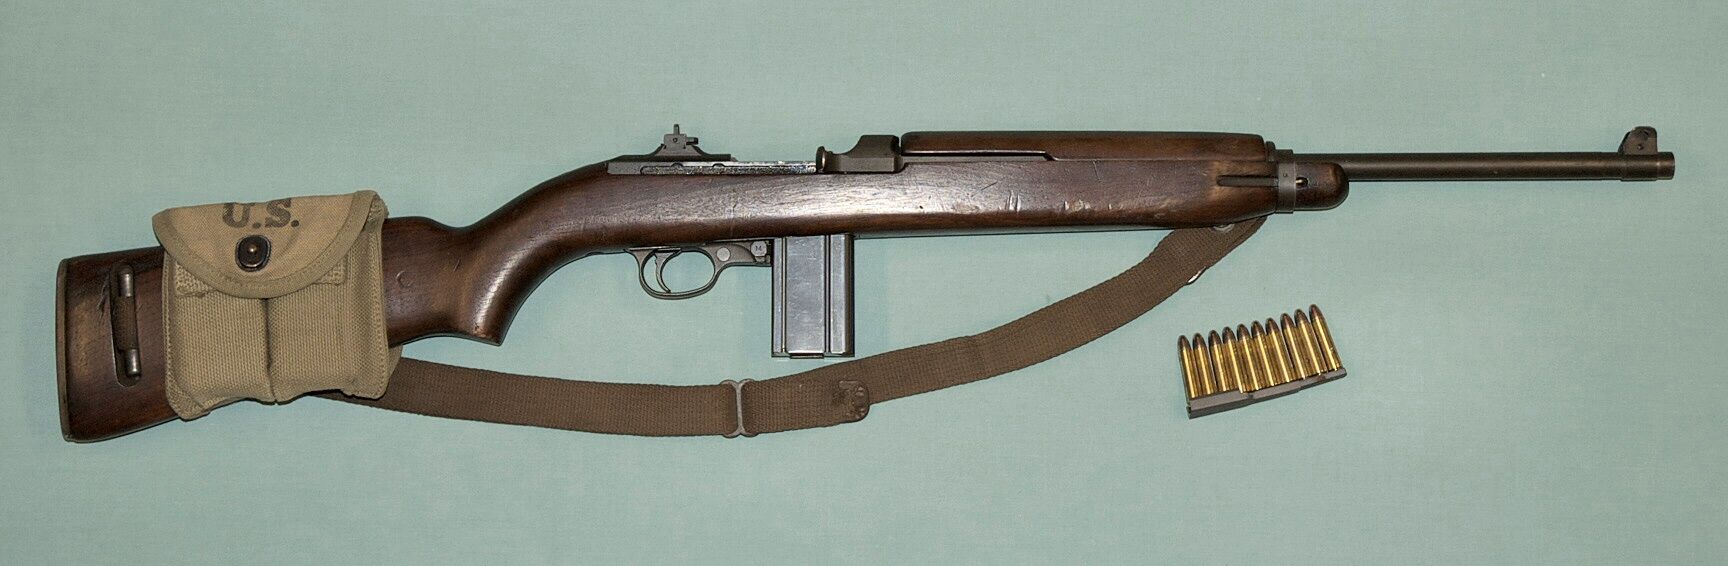 Trench Gun WW2 U.S. Belt Dated 1941